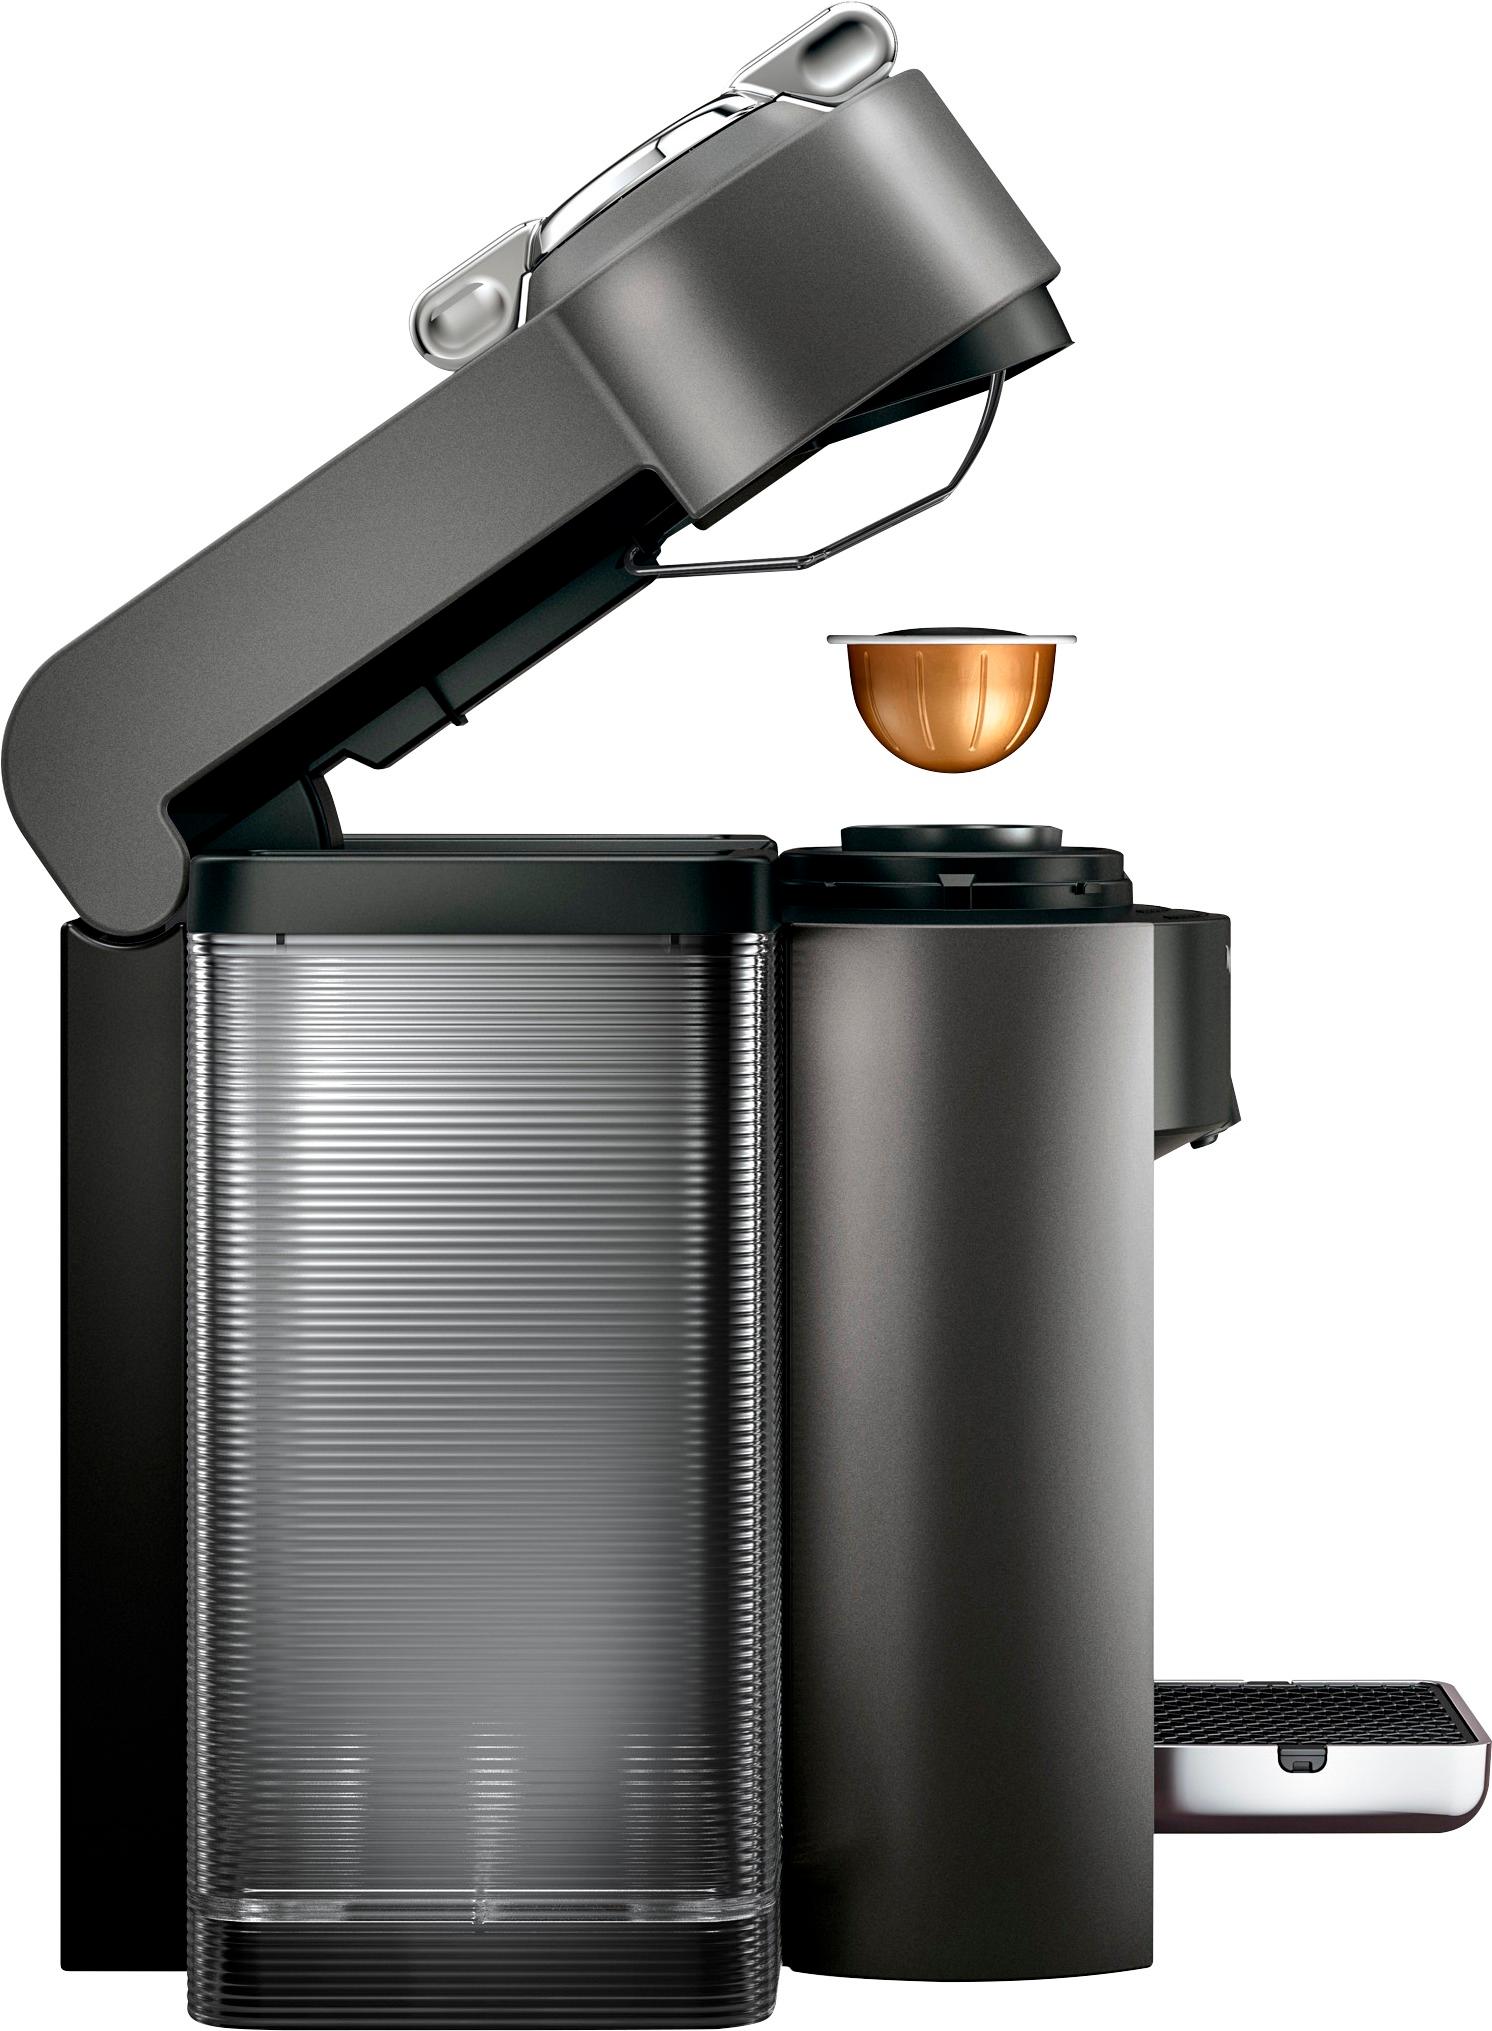 Nespresso VertuoPlus Deluxe Coffee & Espresso Maker by De'Longhi with Aeroccino